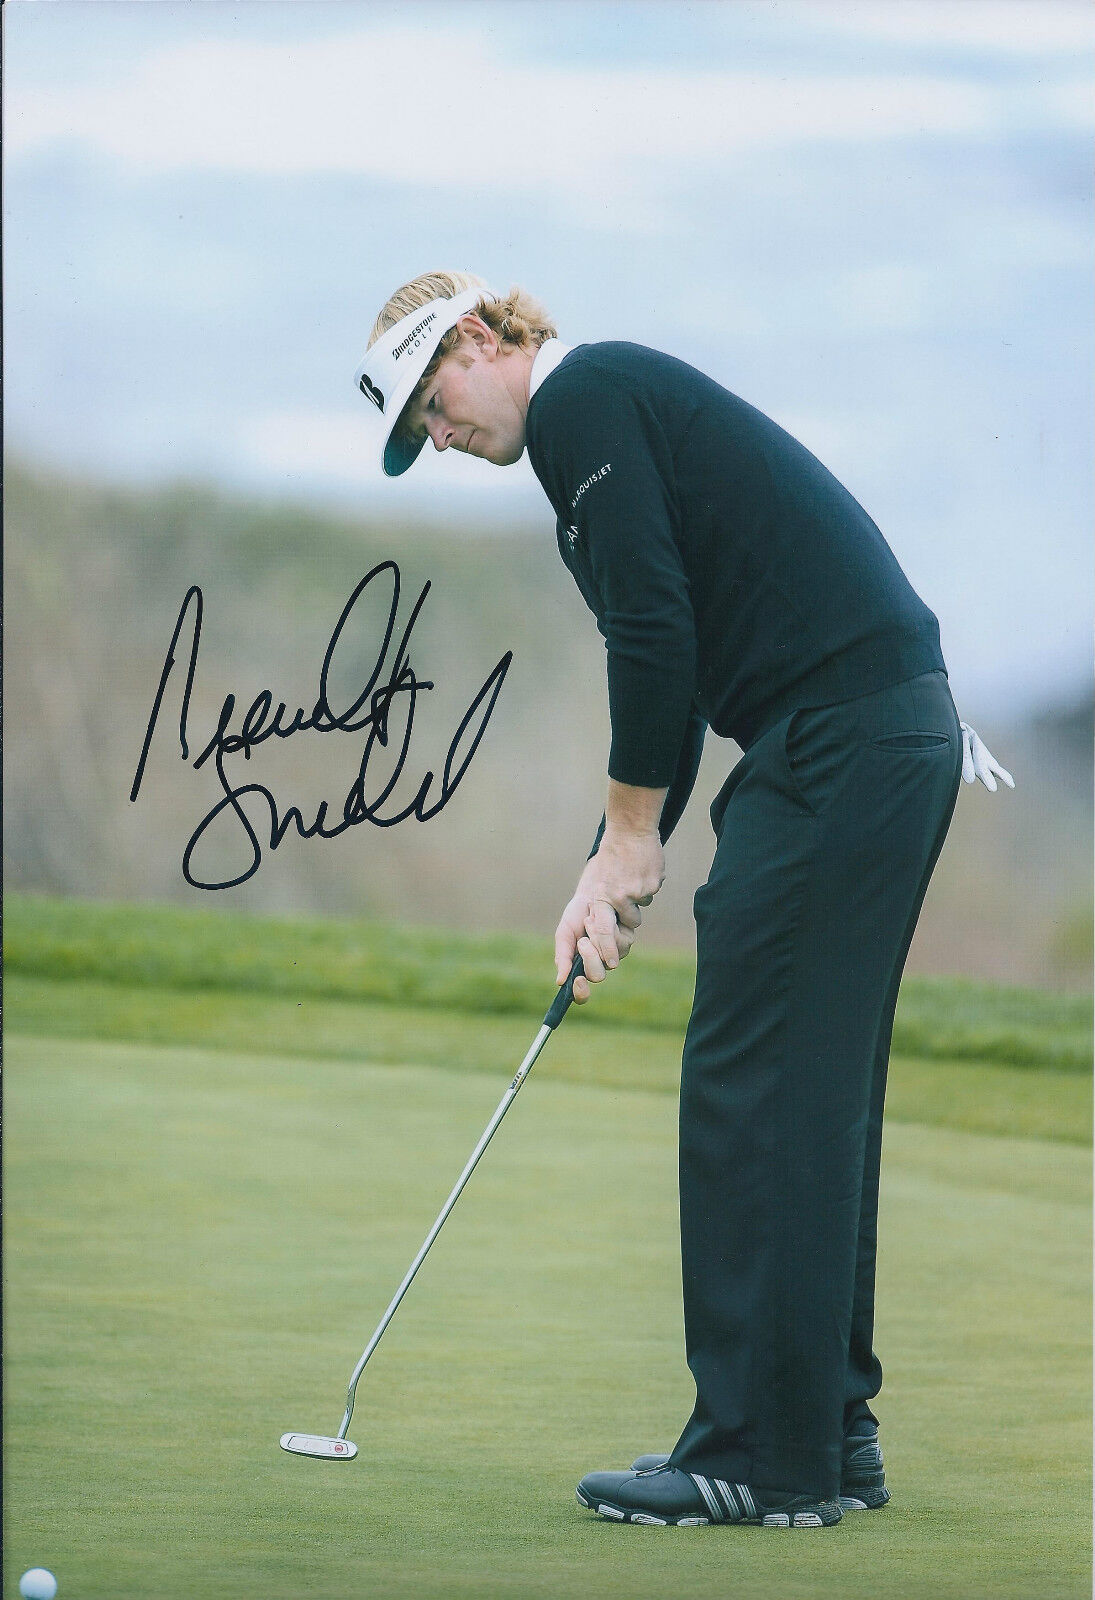 Brandt SNEDEKER SIGNED AUTOGRAPH 12x8 Photo Poster painting AFTAL COA US PGA Tour GOLF